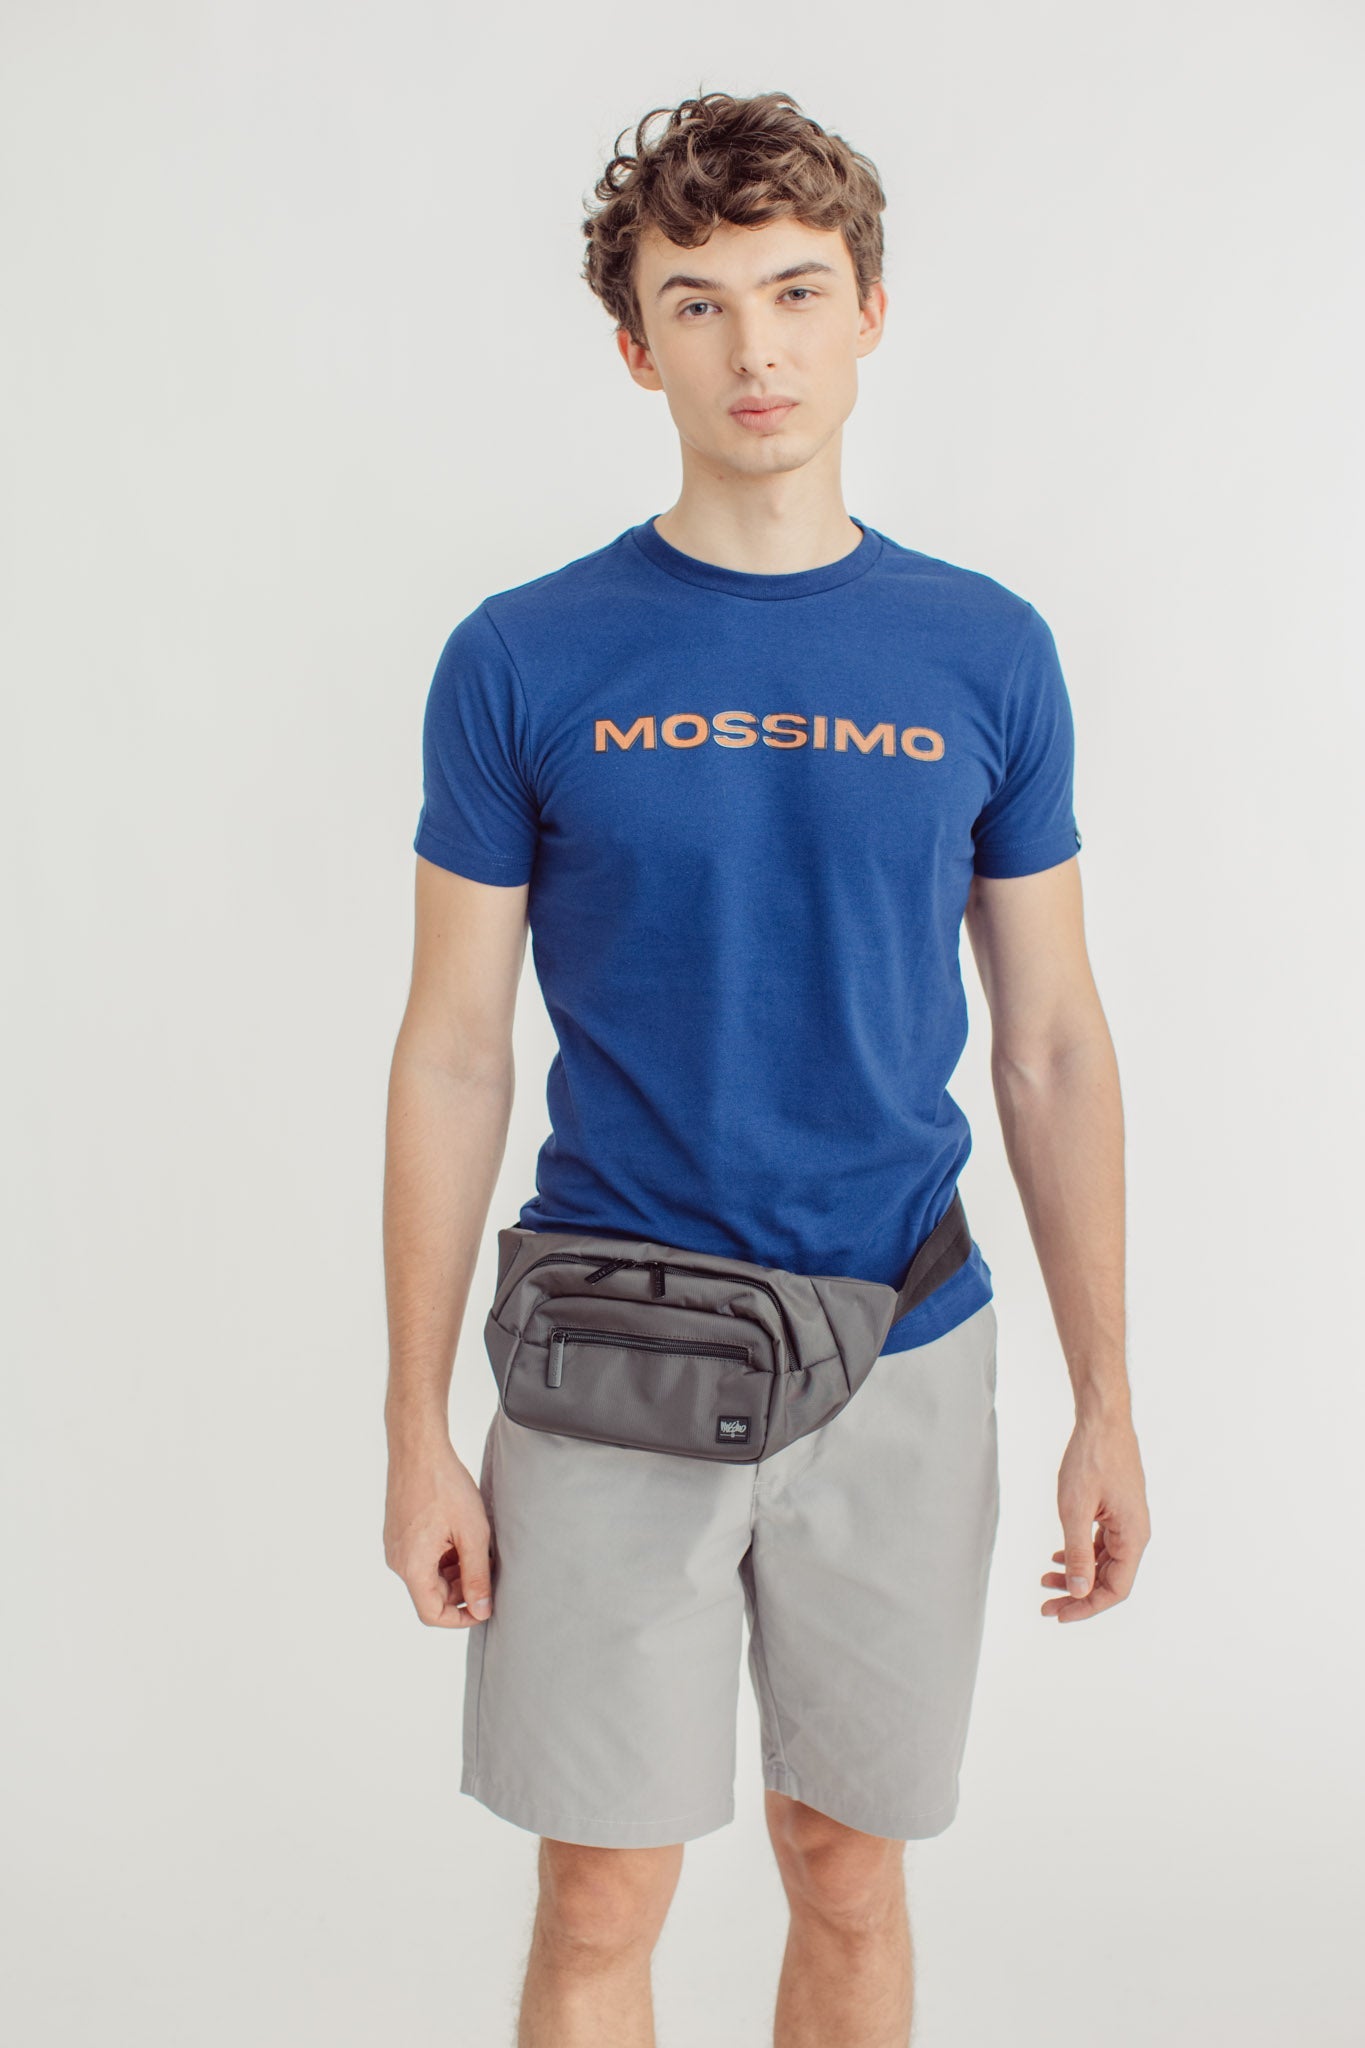 Vincent Mossimo Men's Belt Bag